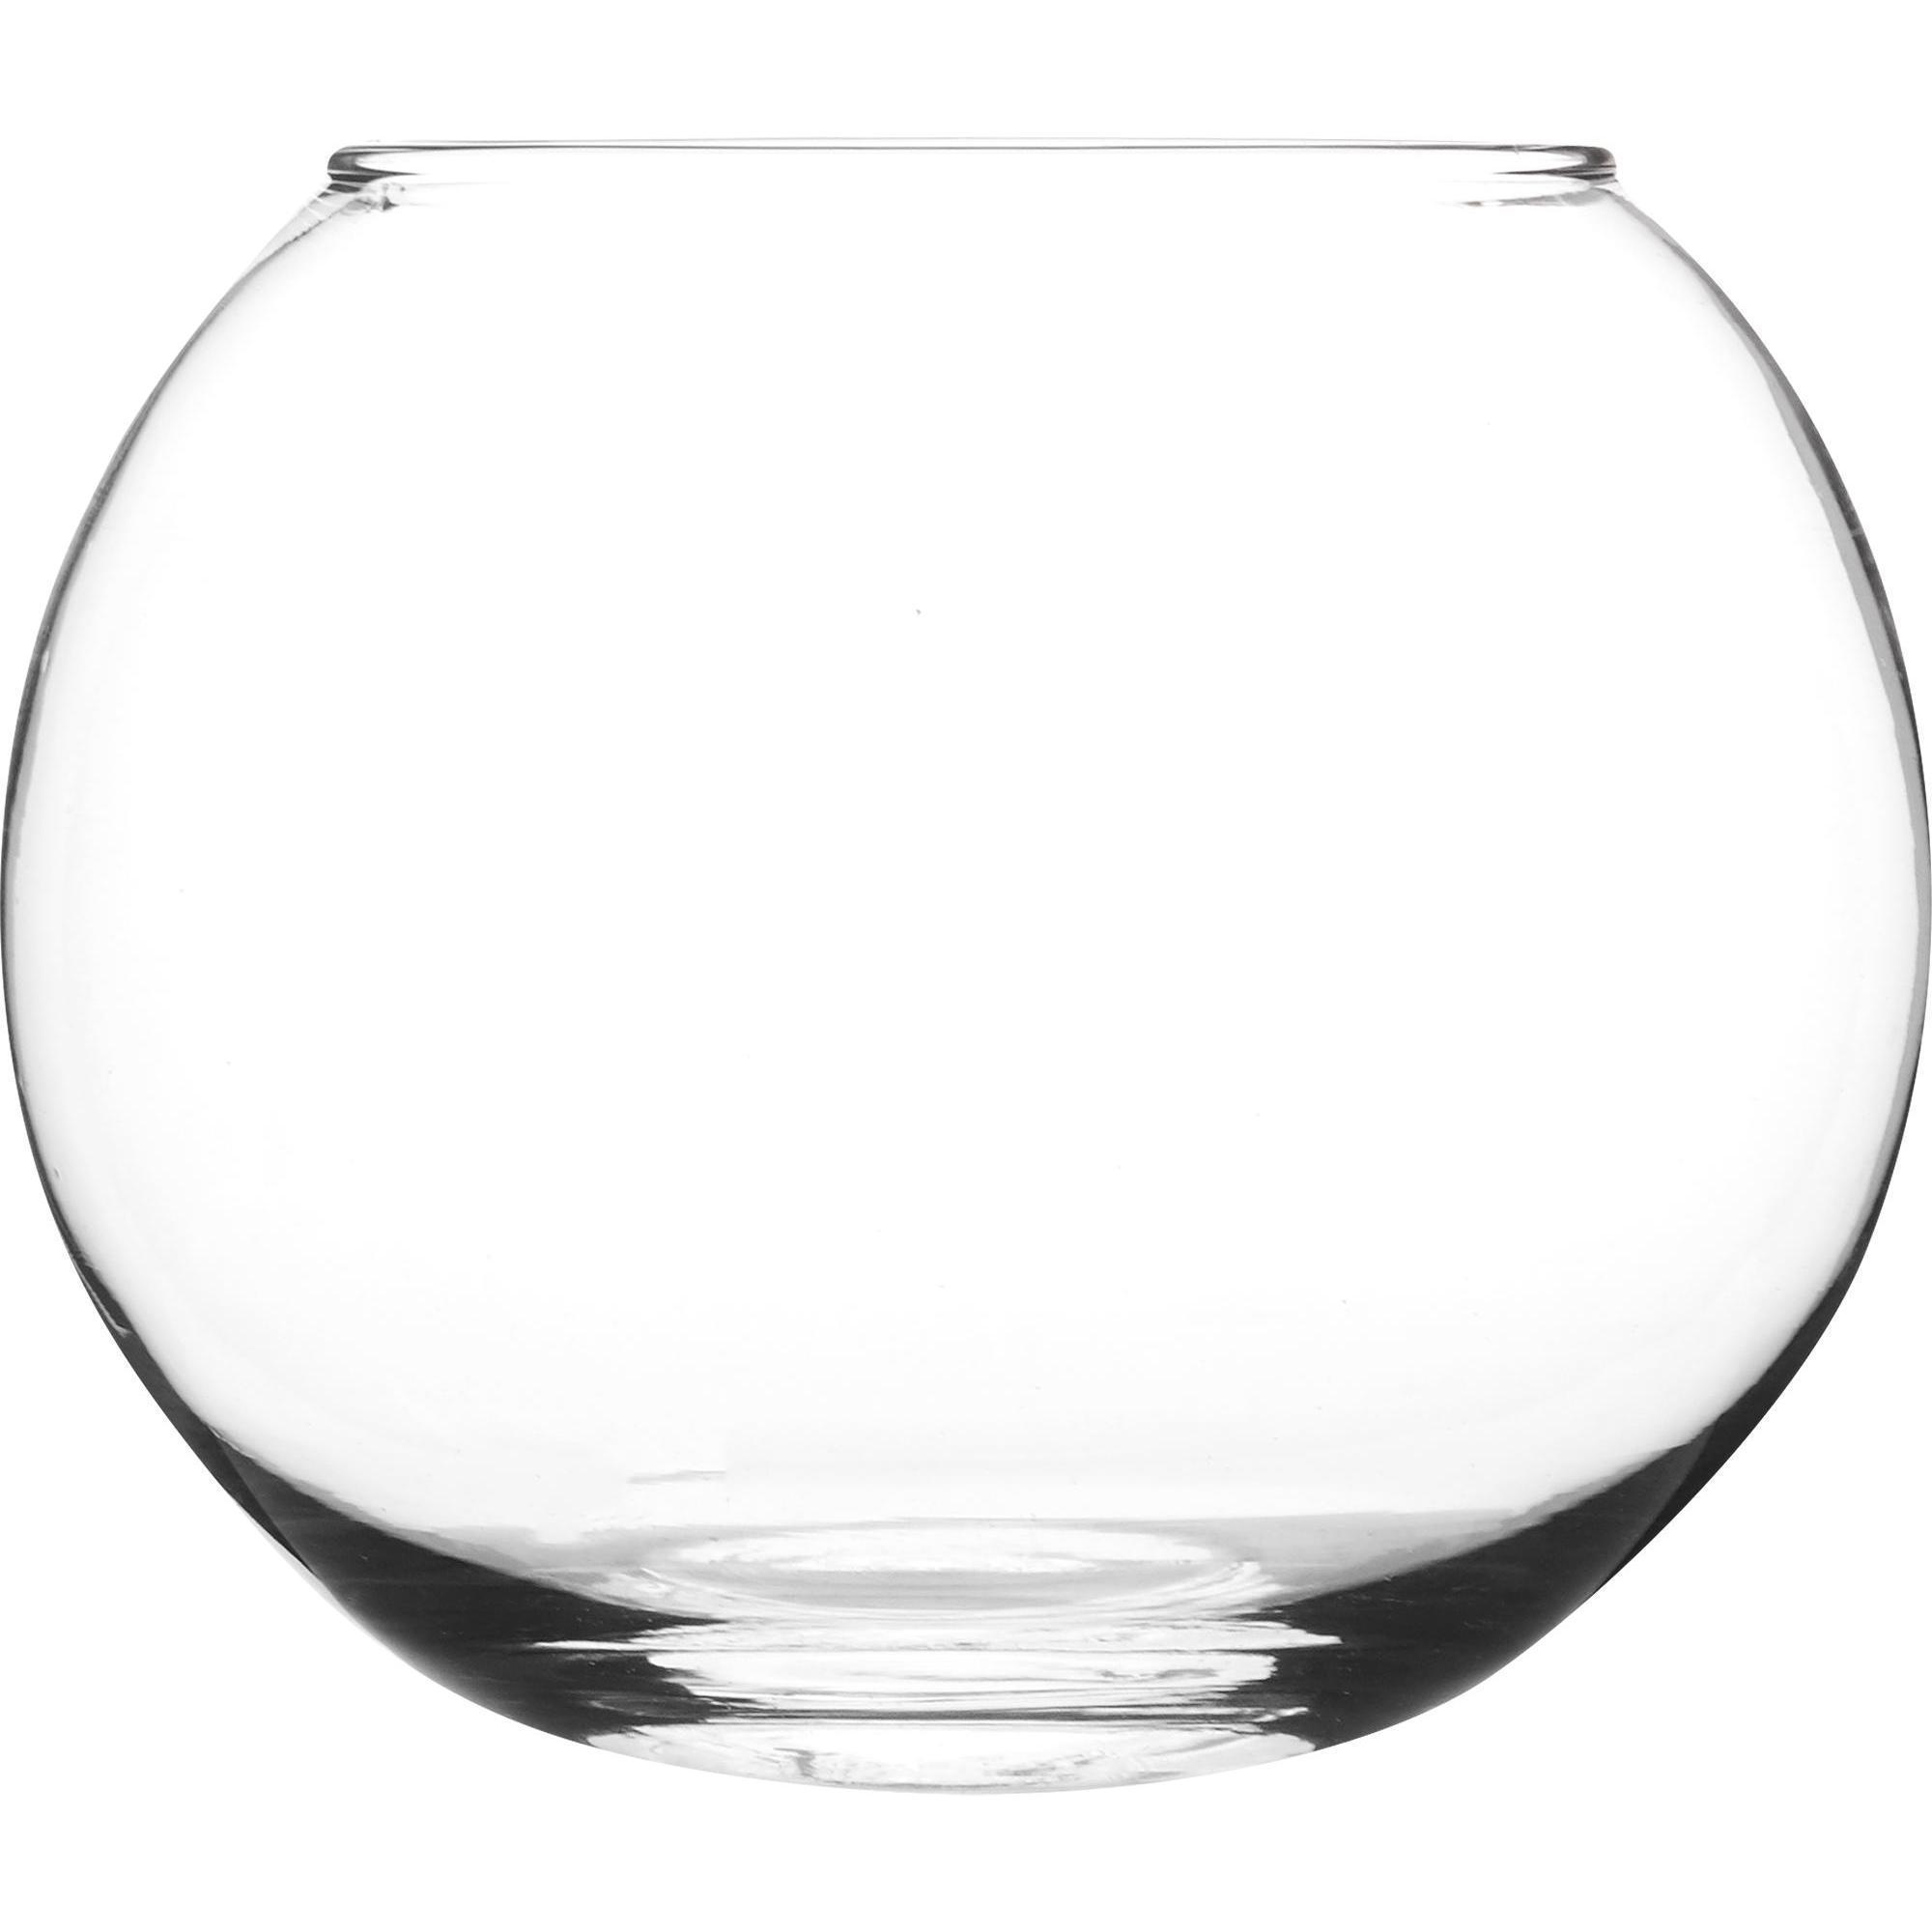  «Шар» стекло цвет прозрачный –   по цене 3740 тенге .